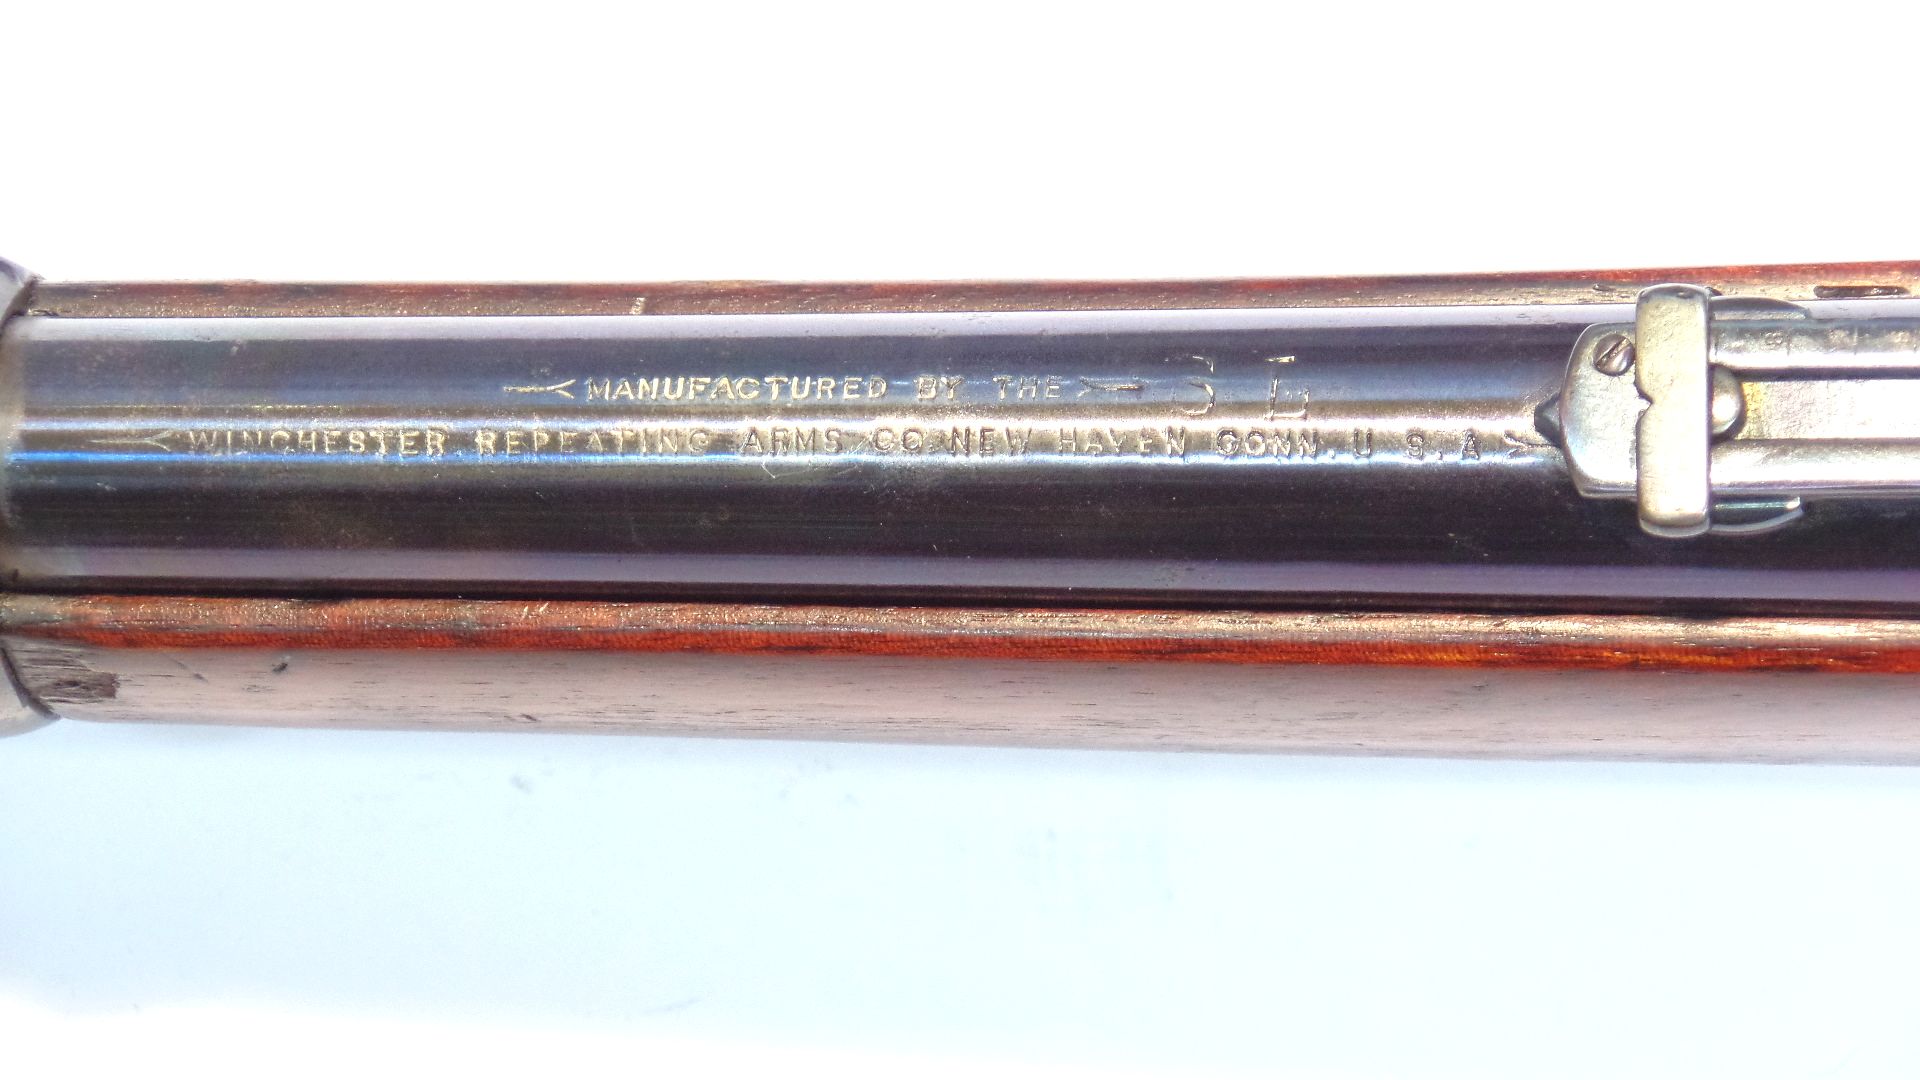 Winchester Saddle Carbine Originale 1886 calibre 38-56